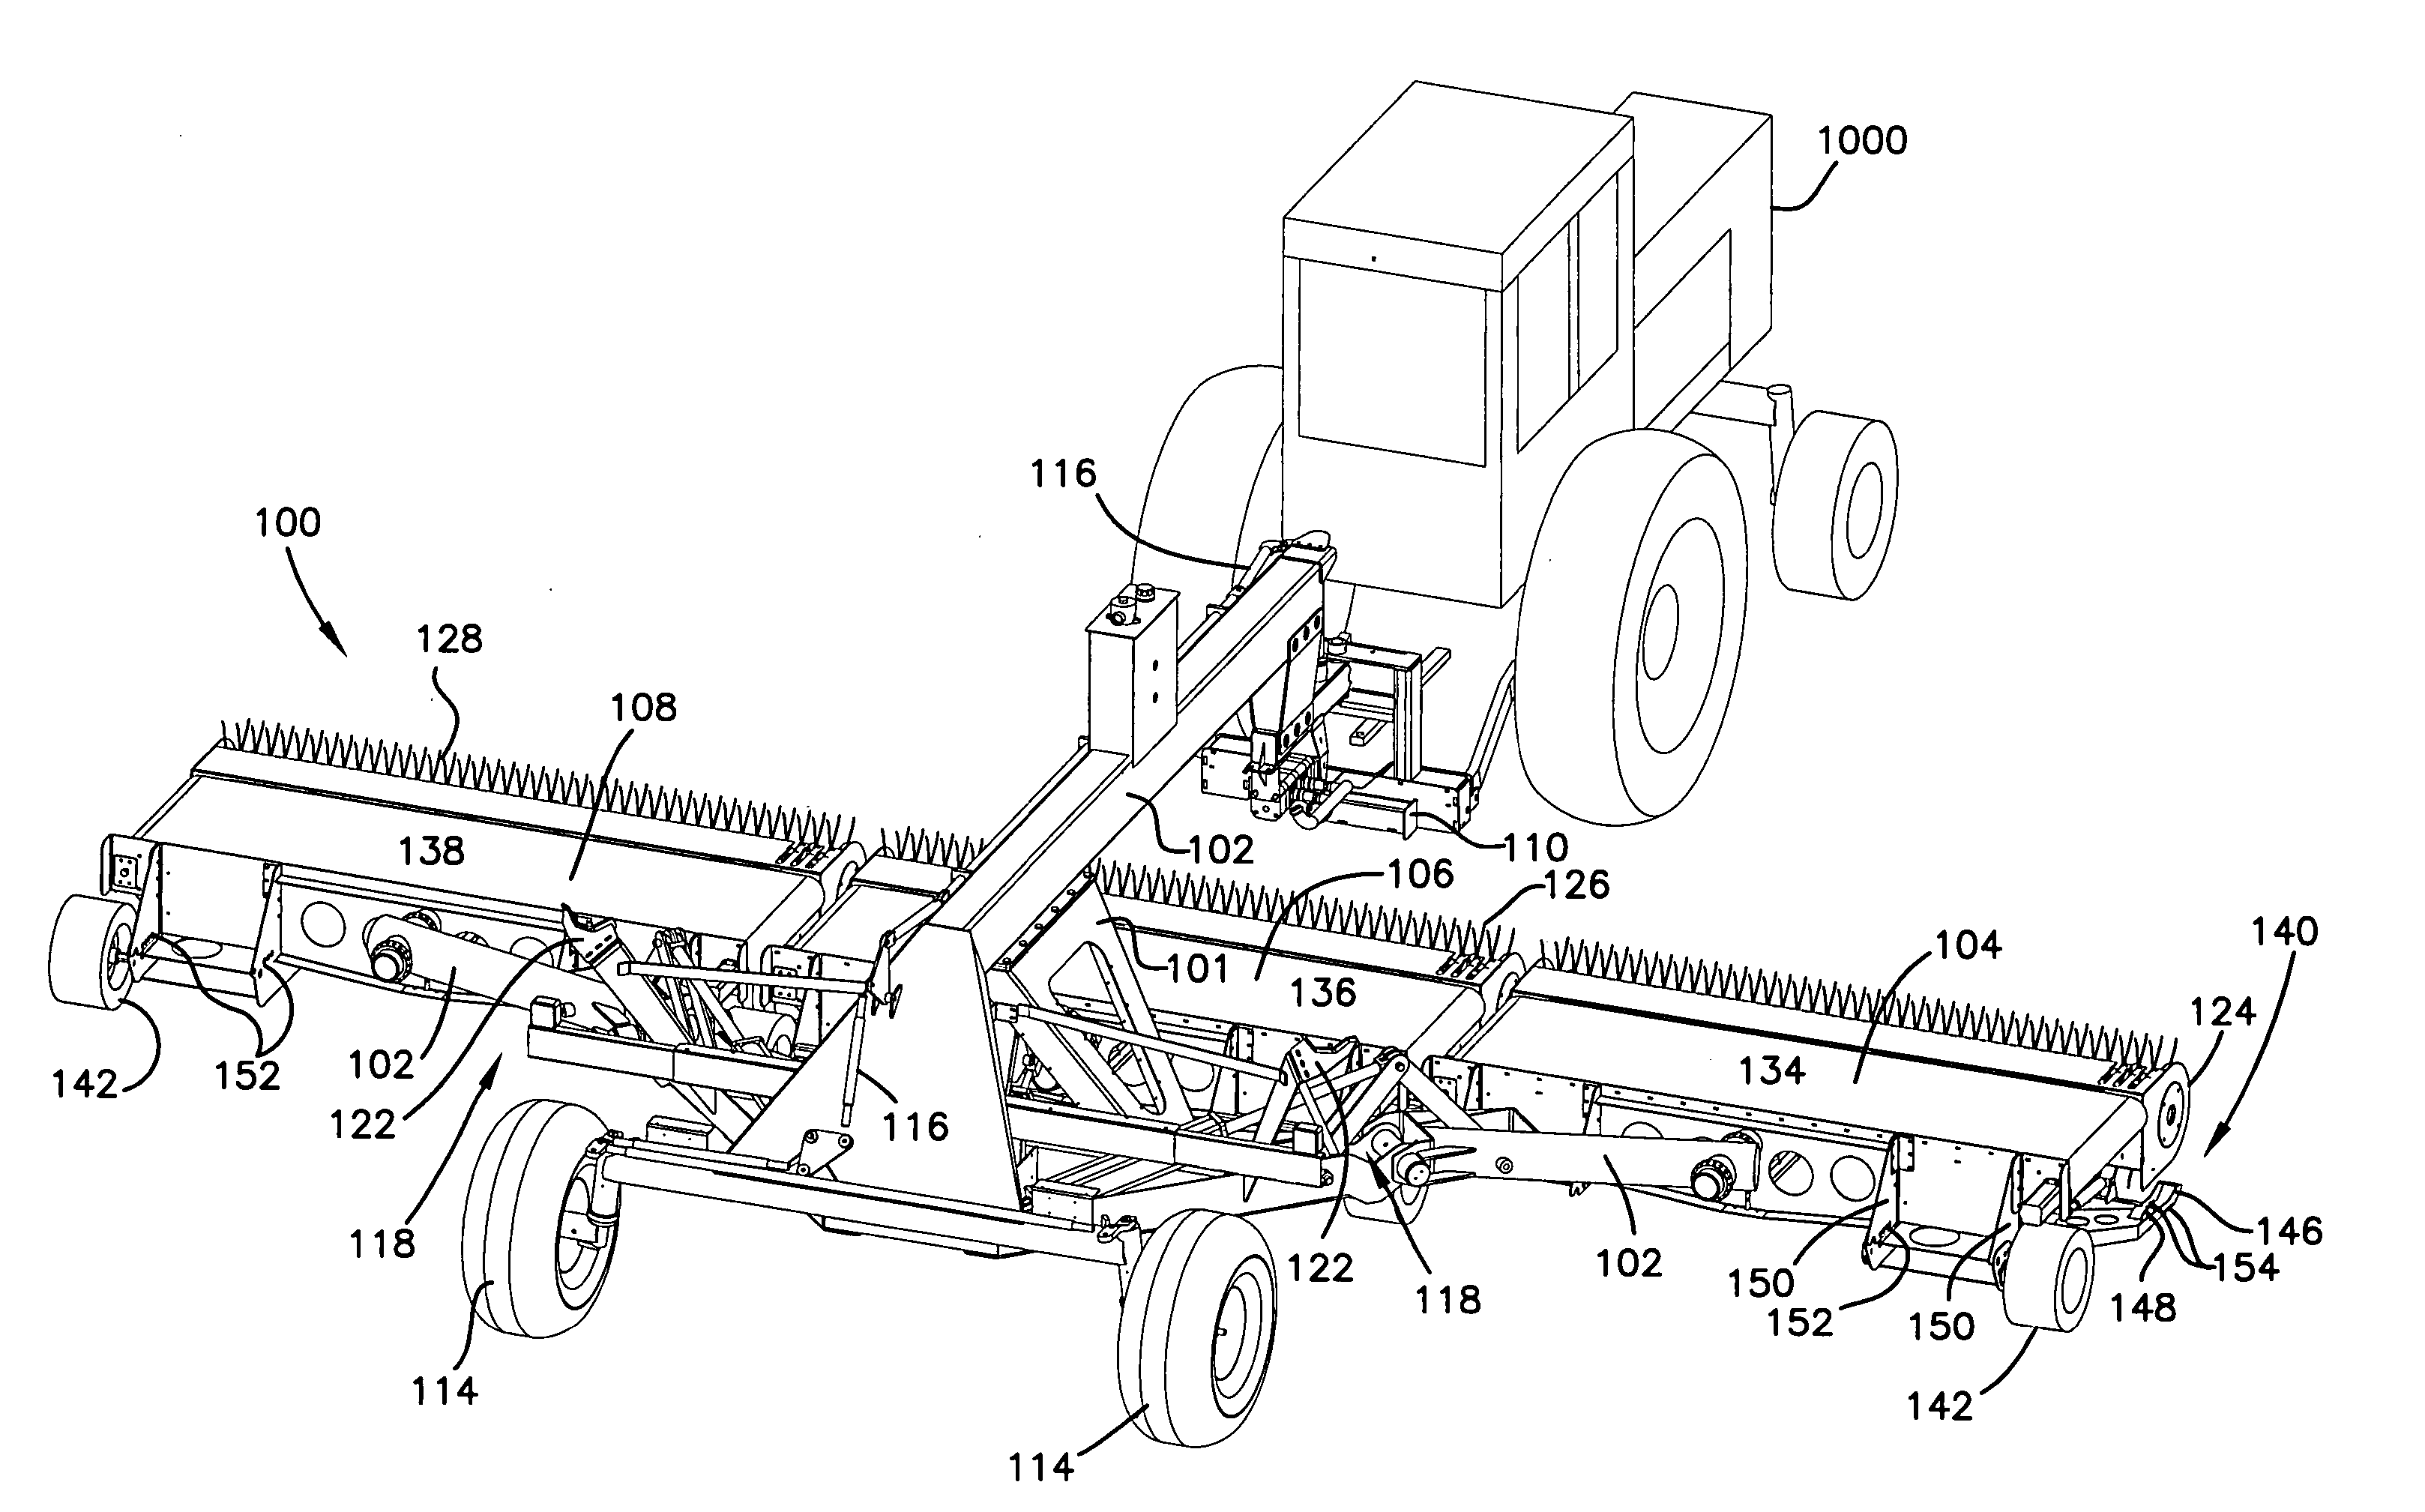 Windrow merging apparatus